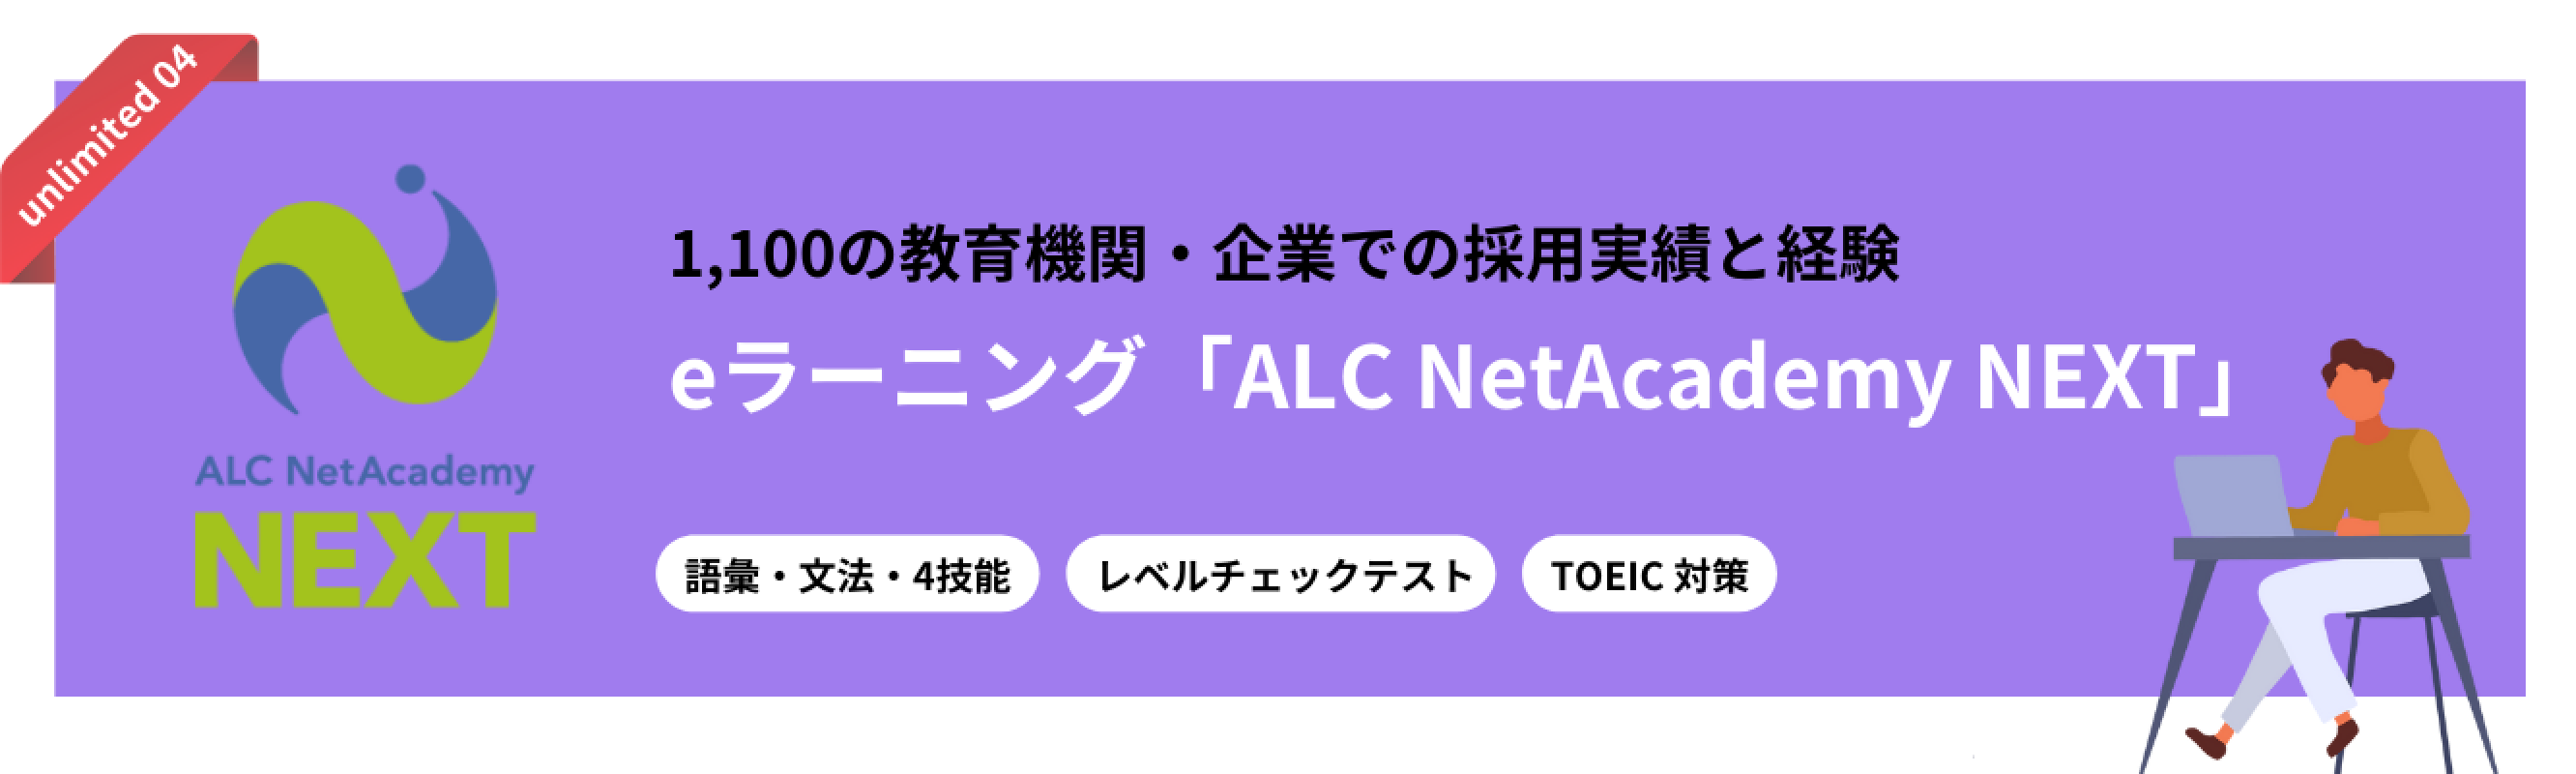 ALC NetAcademy NEXT 1,100の教育機関・企業での採用実績と経験 eラーニング「ALC NetAcademy NEXT」 語彙・文法・4技能 レベルチェックテスト TOEIC対策